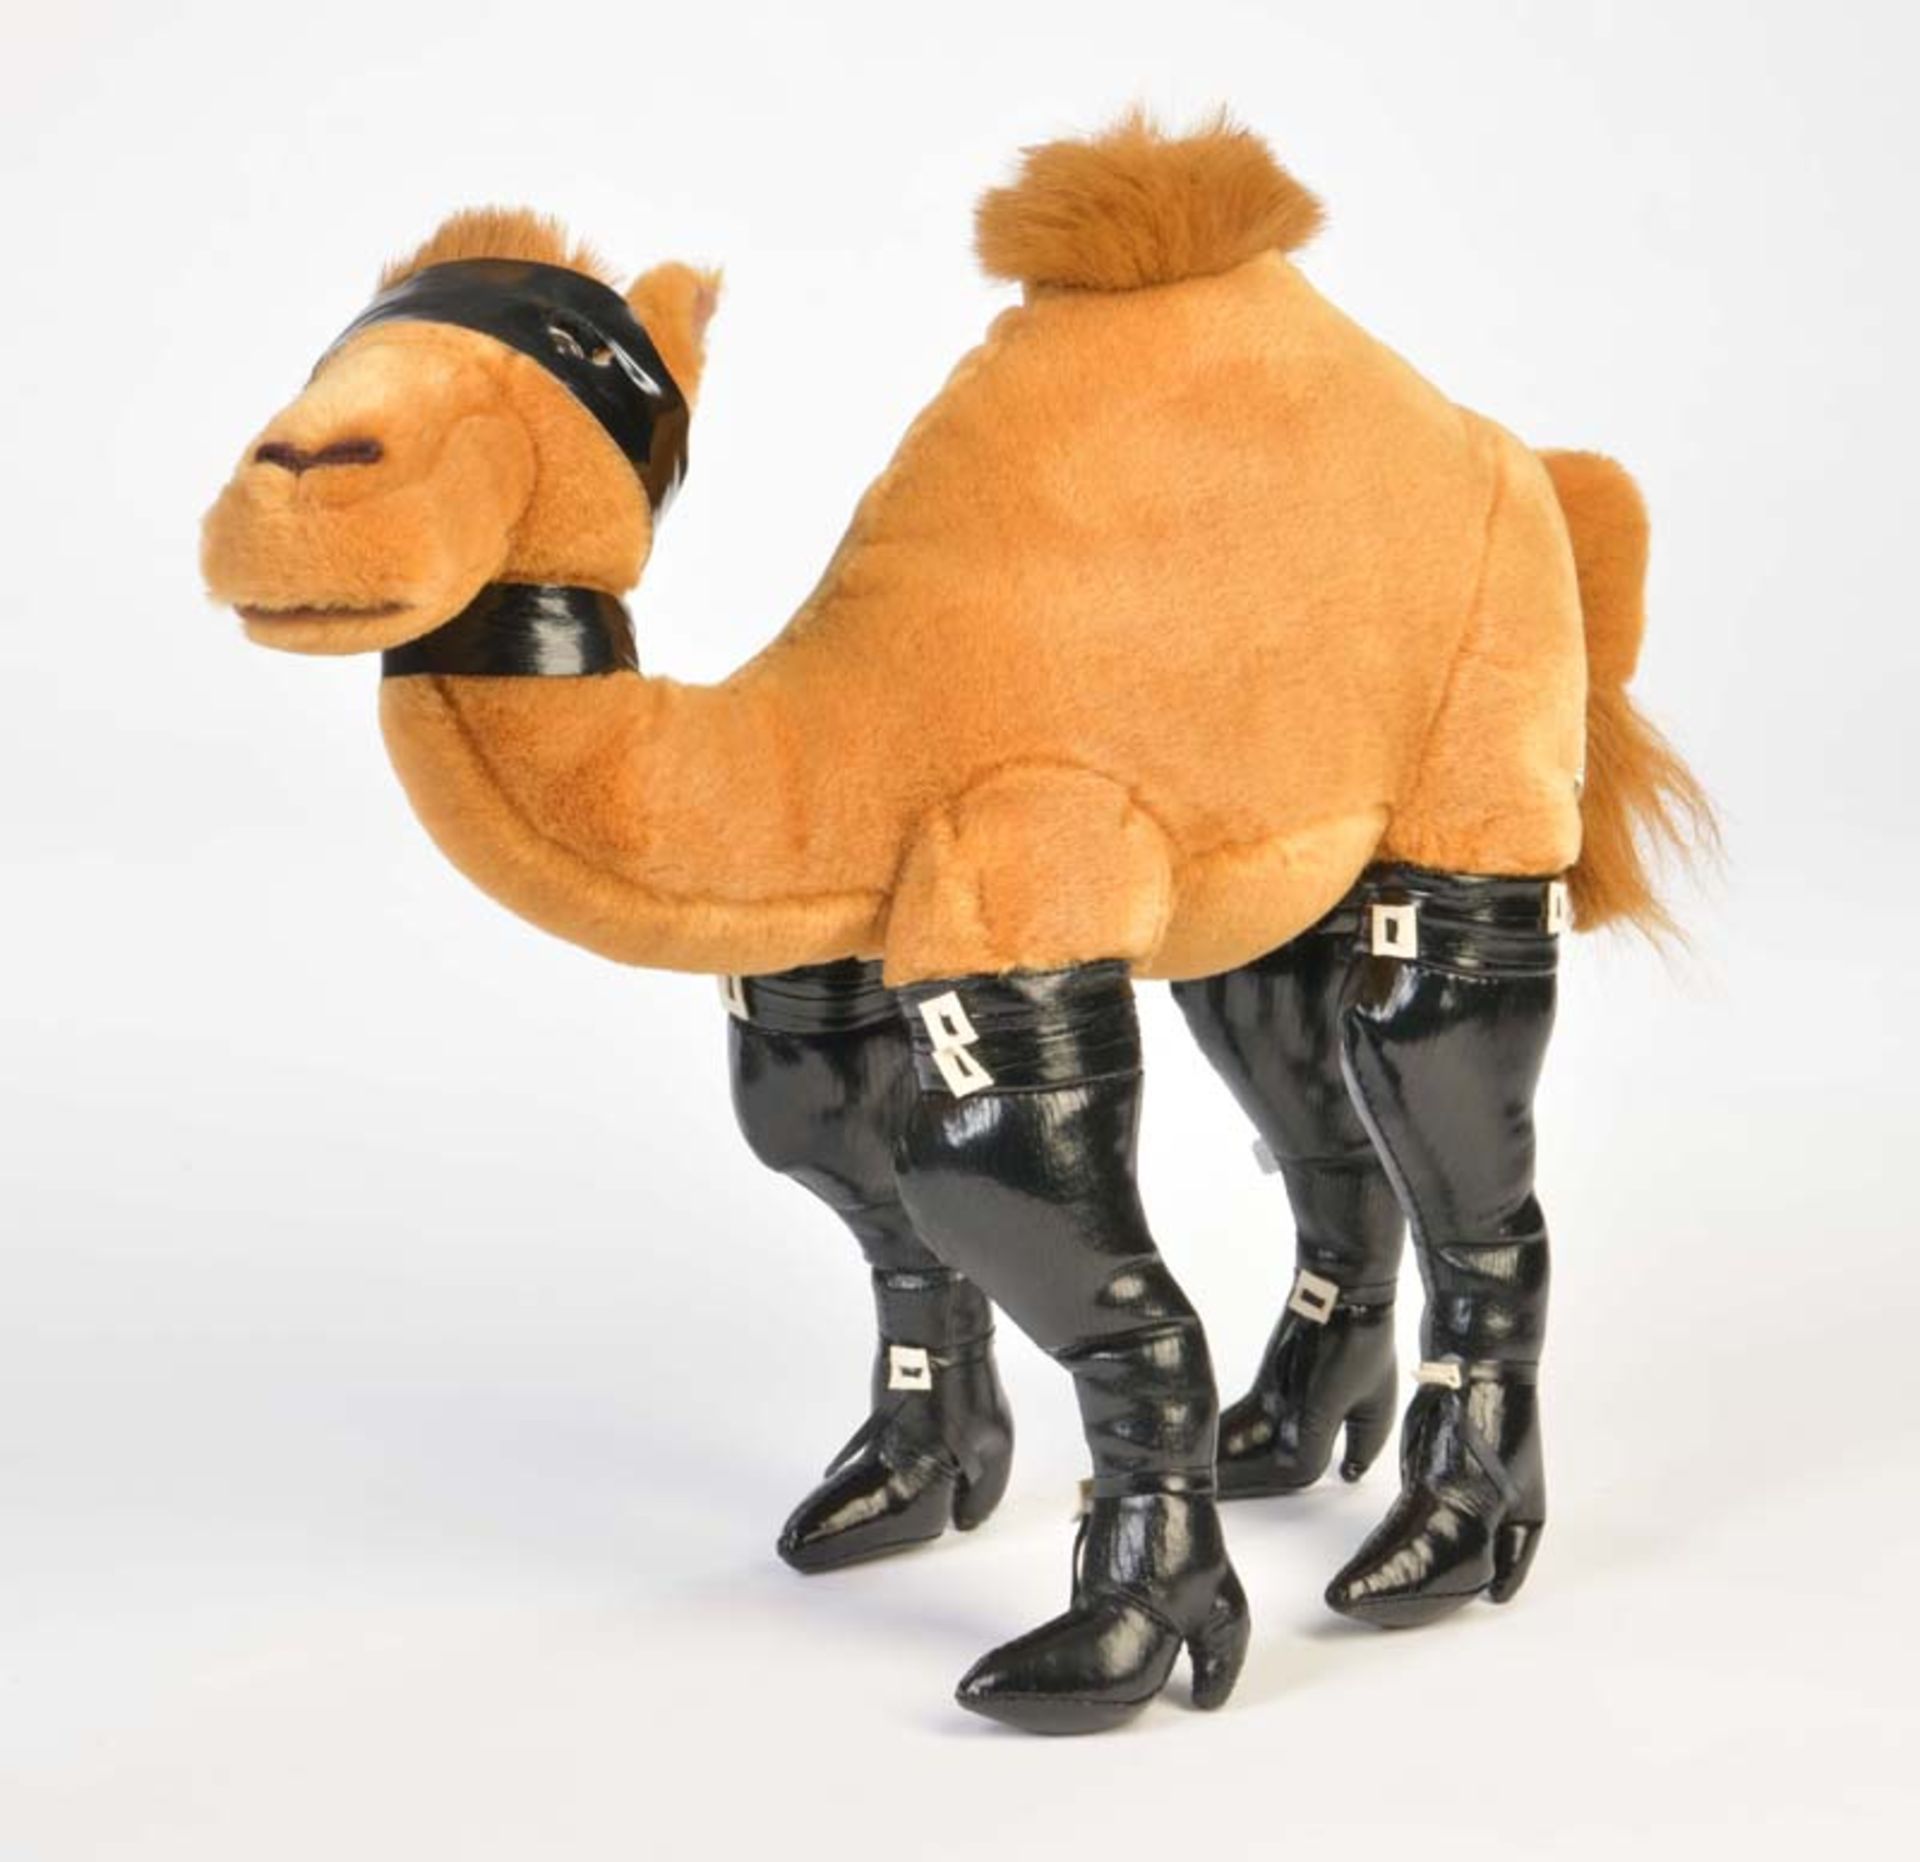 Kamel "Camel", Belgium, 41 cm, Stoff, Z 1Camel "Camel"Belgium, fabric, C 1